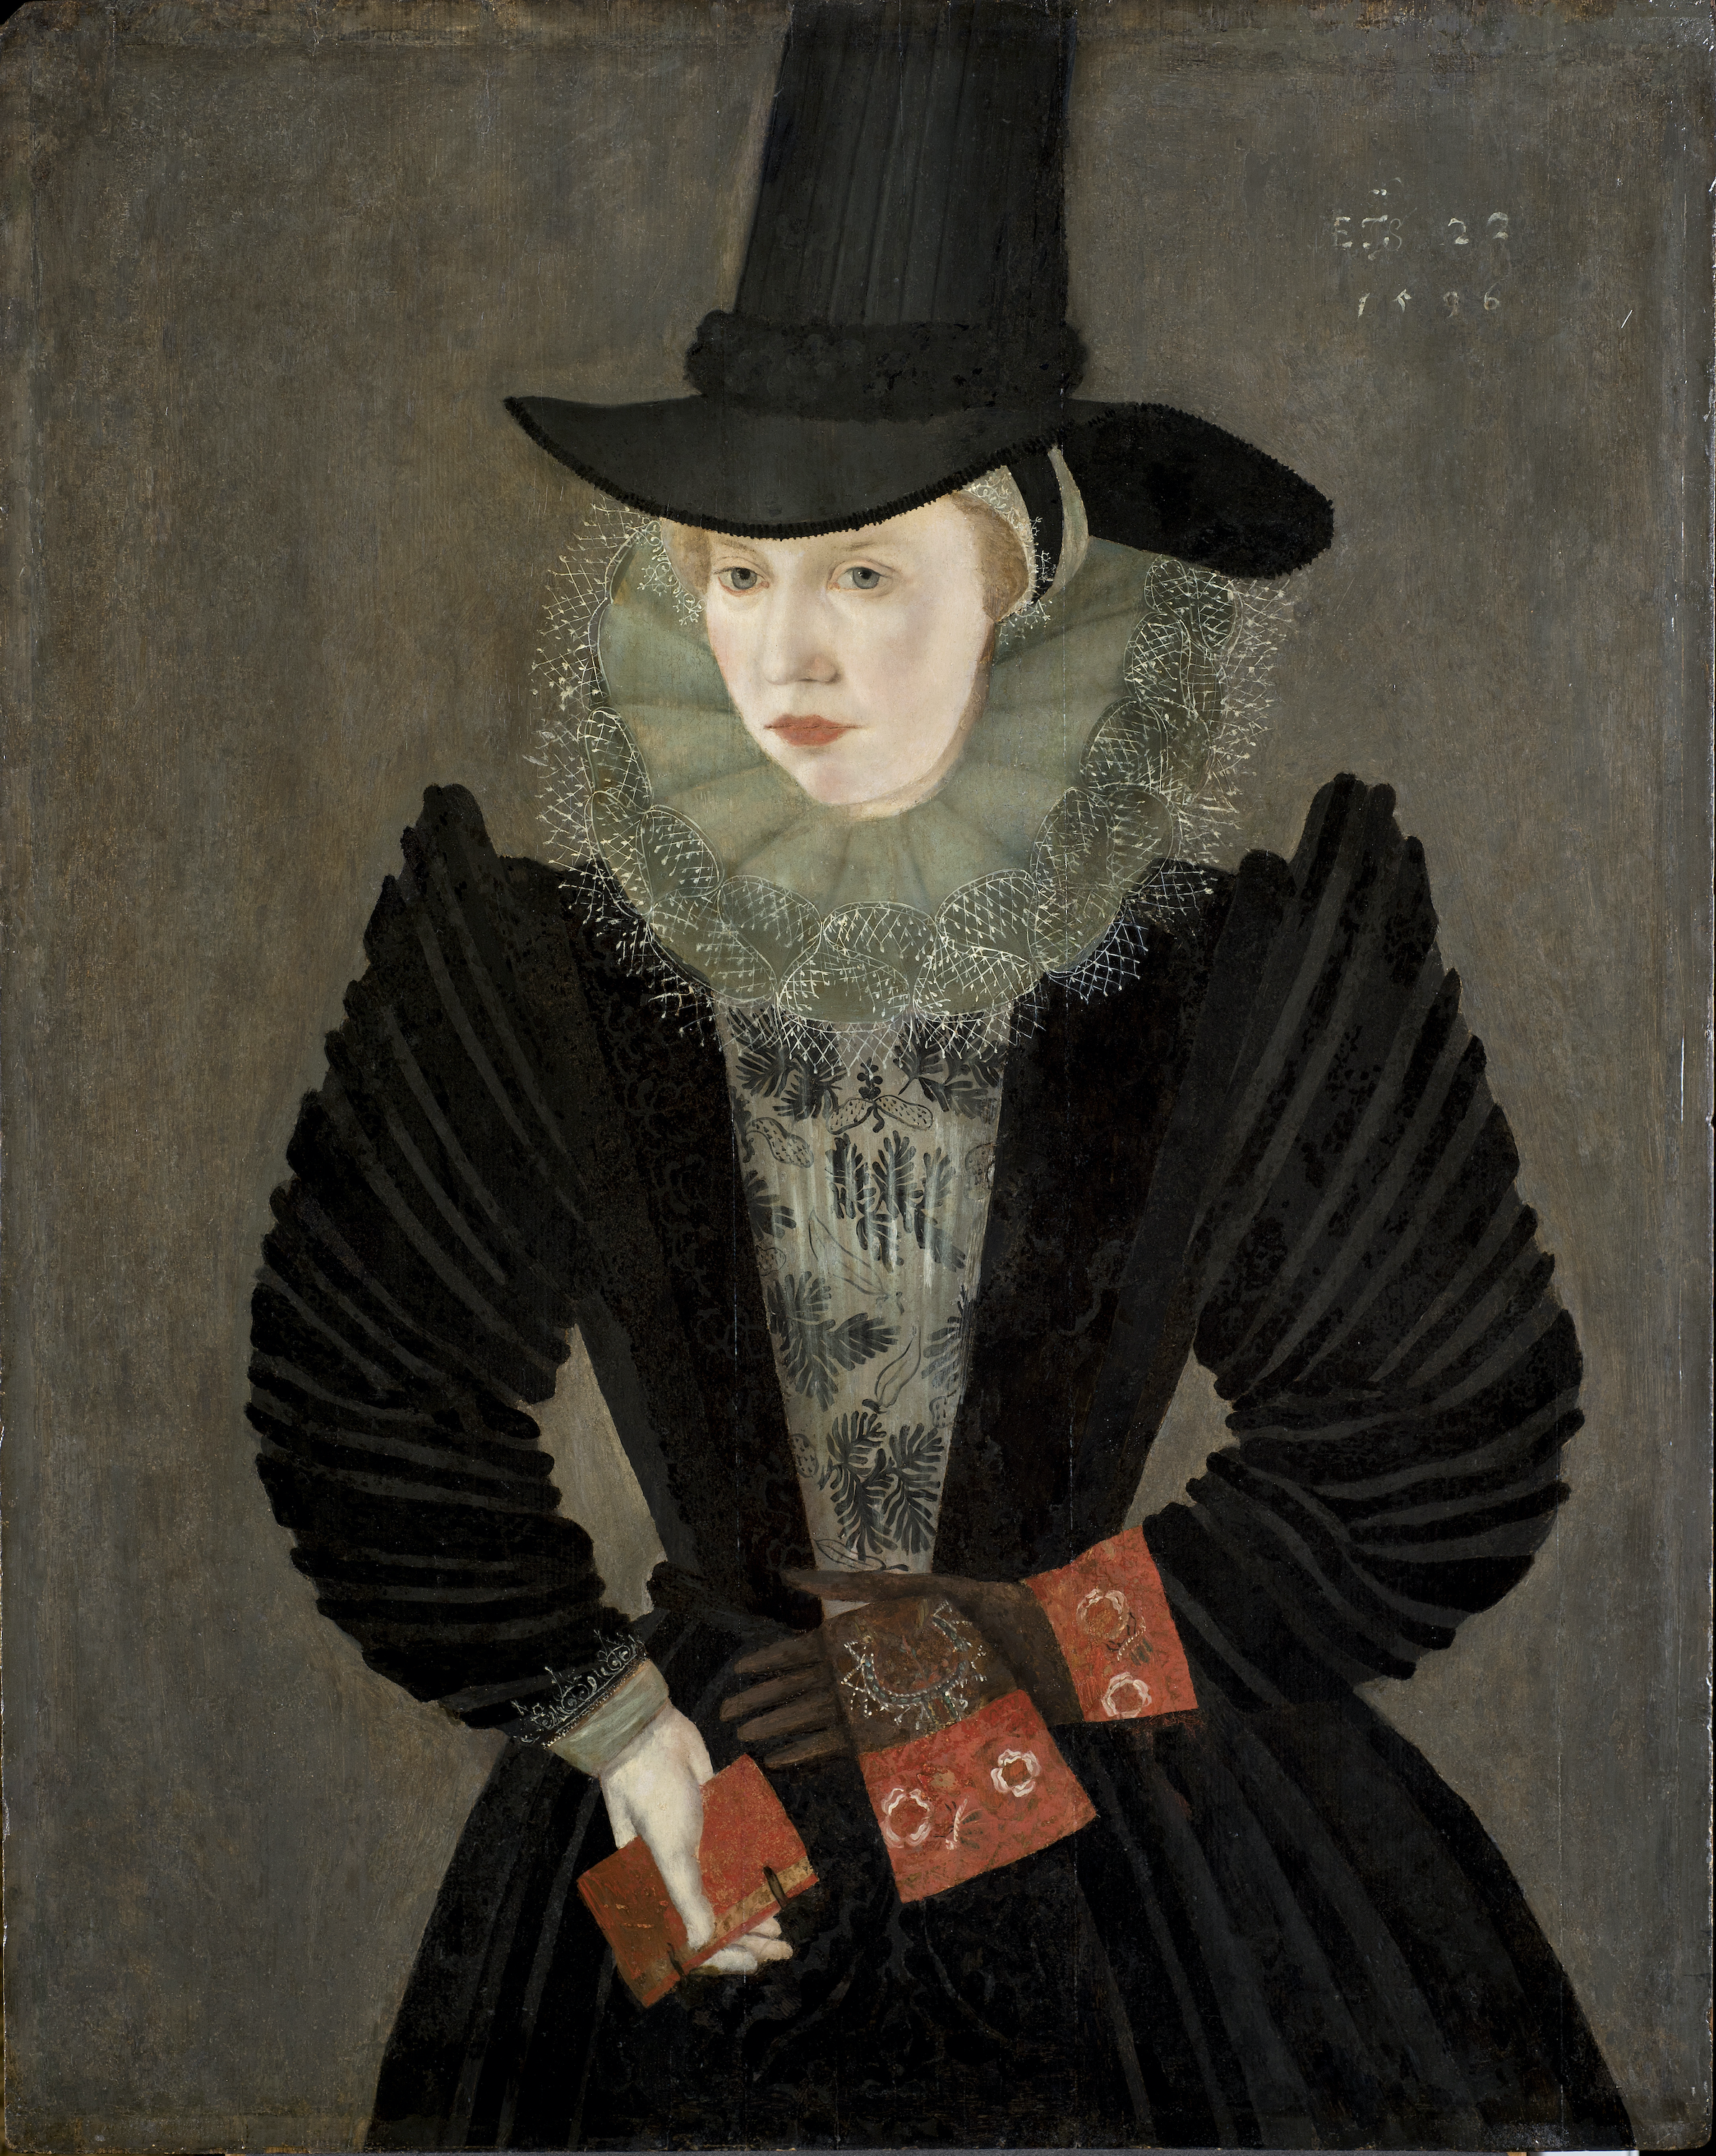 Joan Alleyn by Unbekannter Künstler - 1596 - 79.1 x 63.2 cm Dulwich Picture Gallery